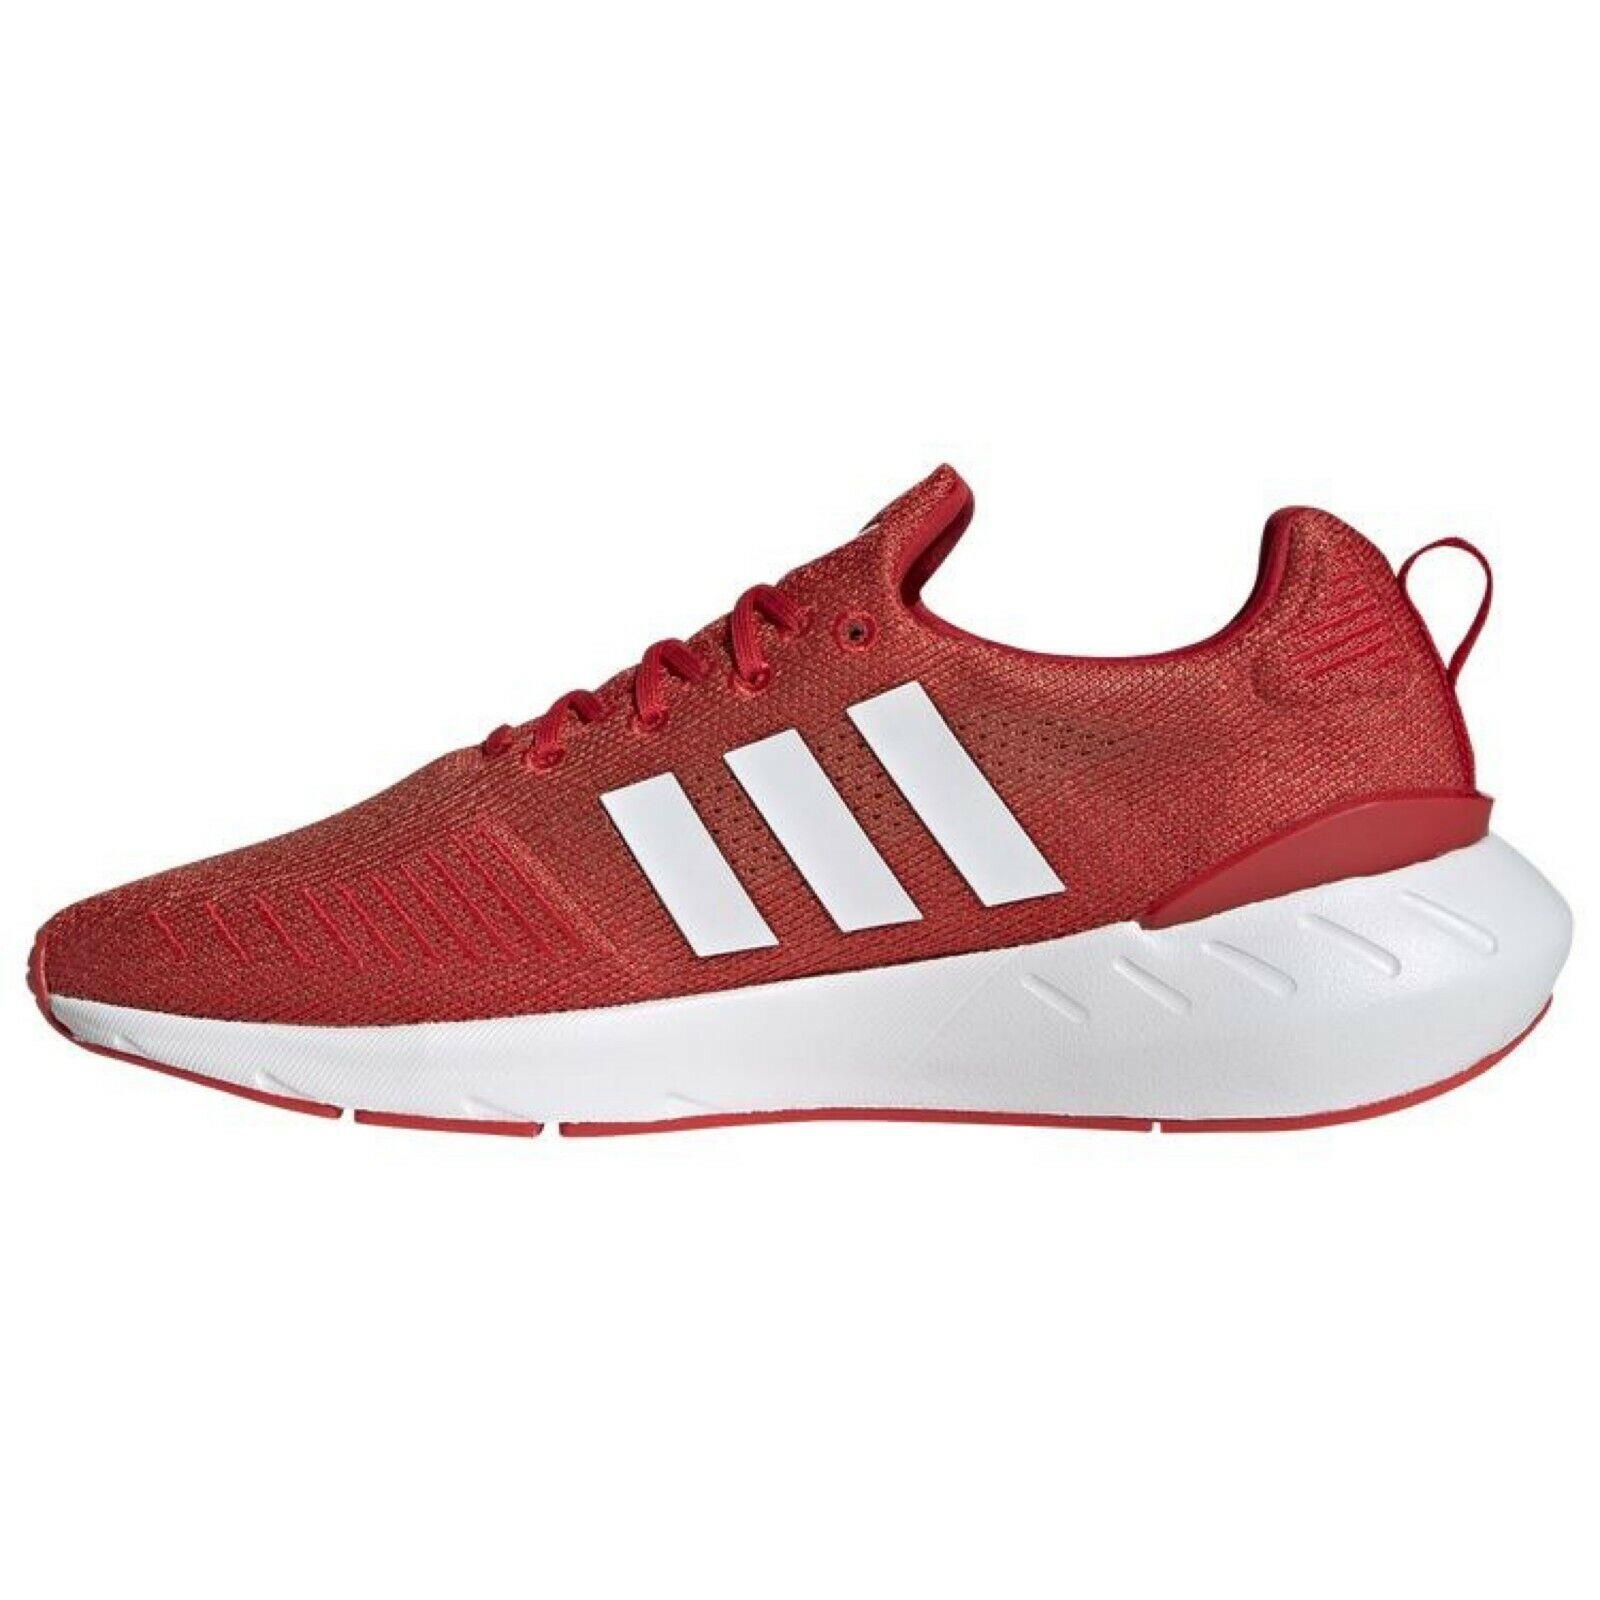 Adidas shoes Originals Swift Run - Red , Red/Black Manufacturer 2